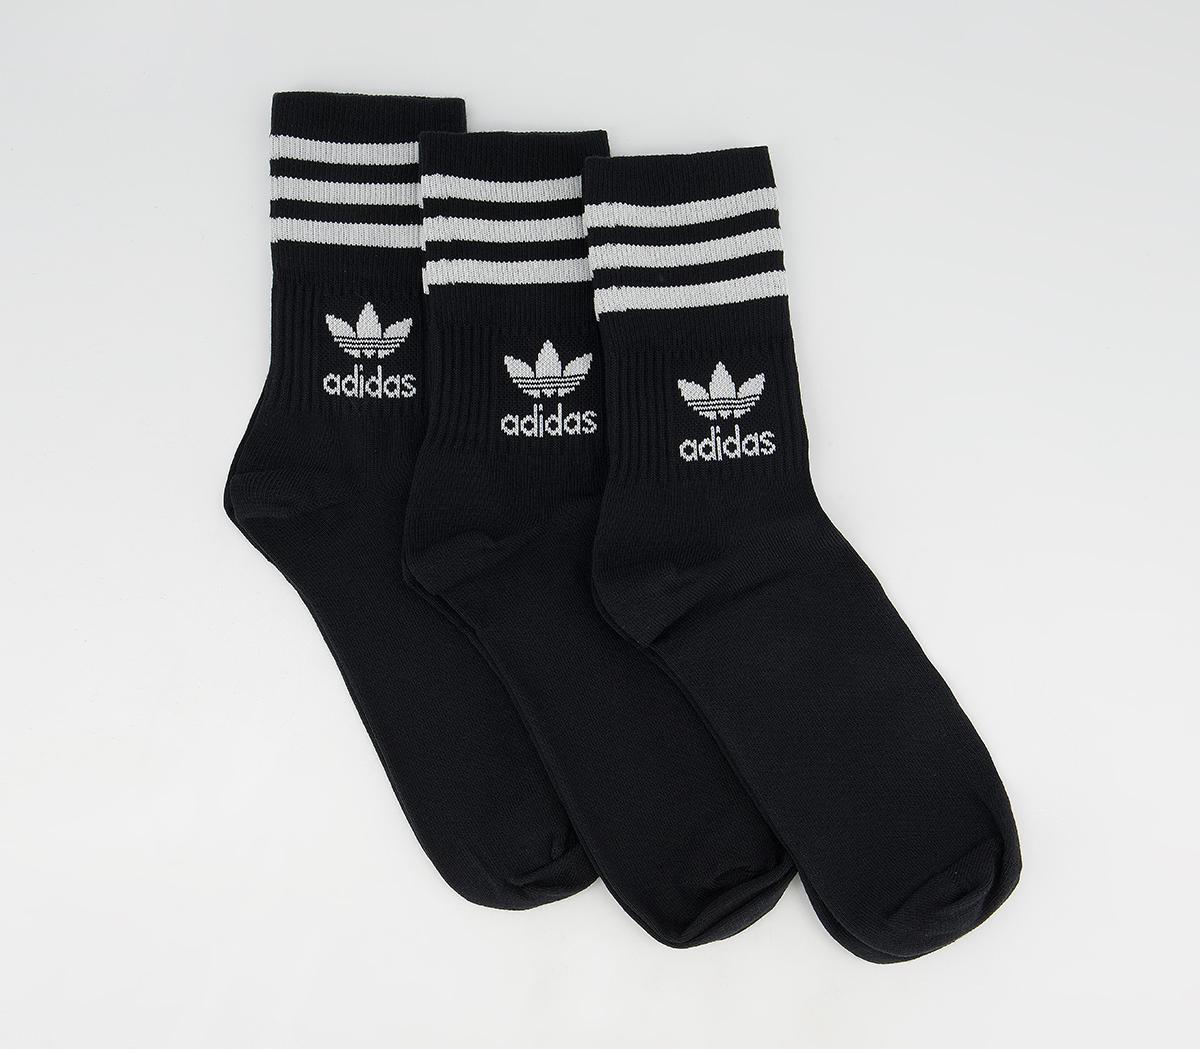 adidas Mid Cut Crew Socks 3 Pack Black White - Accessories